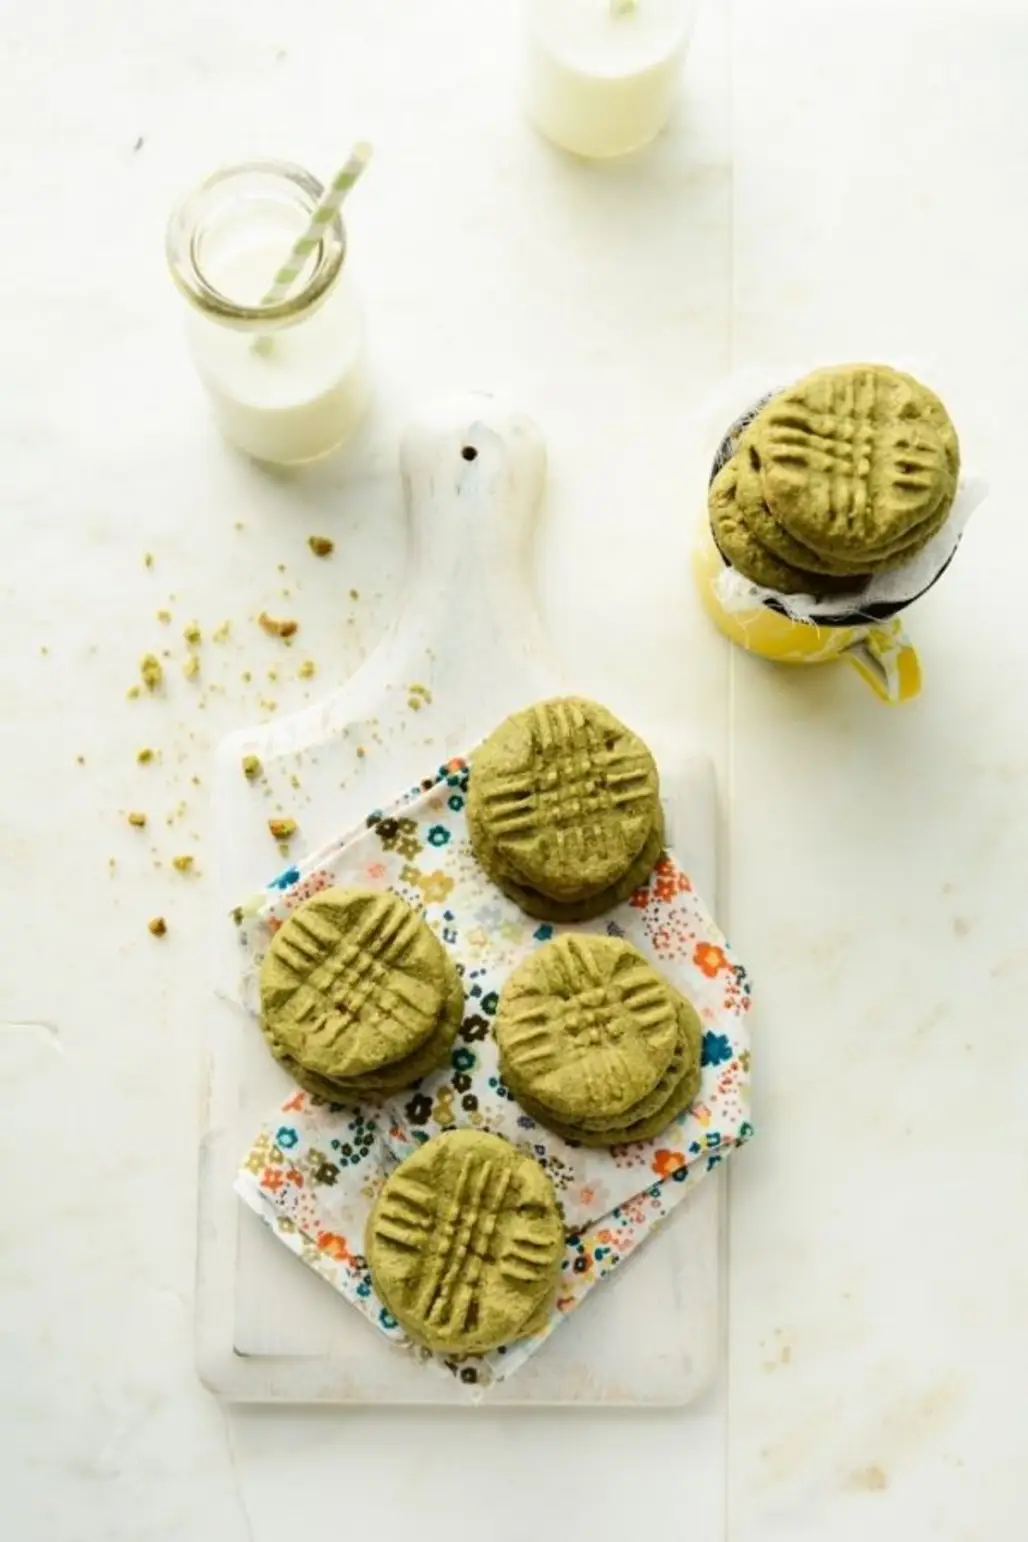 Green Tea Almond Cookies